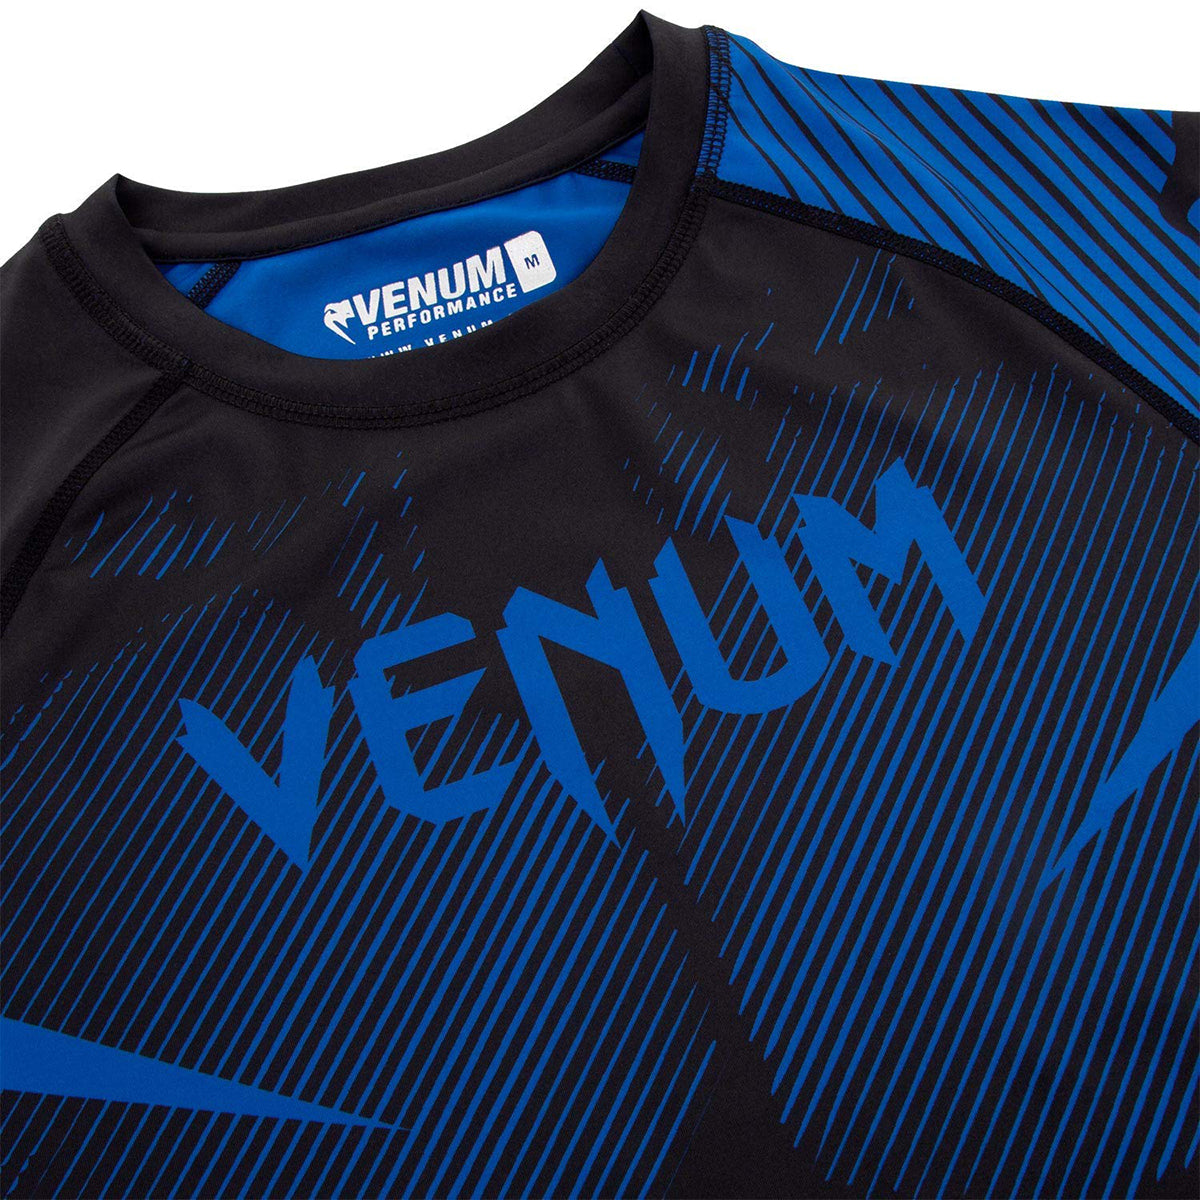 Venum No-Gi 2.0 Short Sleeve MMA Compression Rashguard - Black/Blue Venum